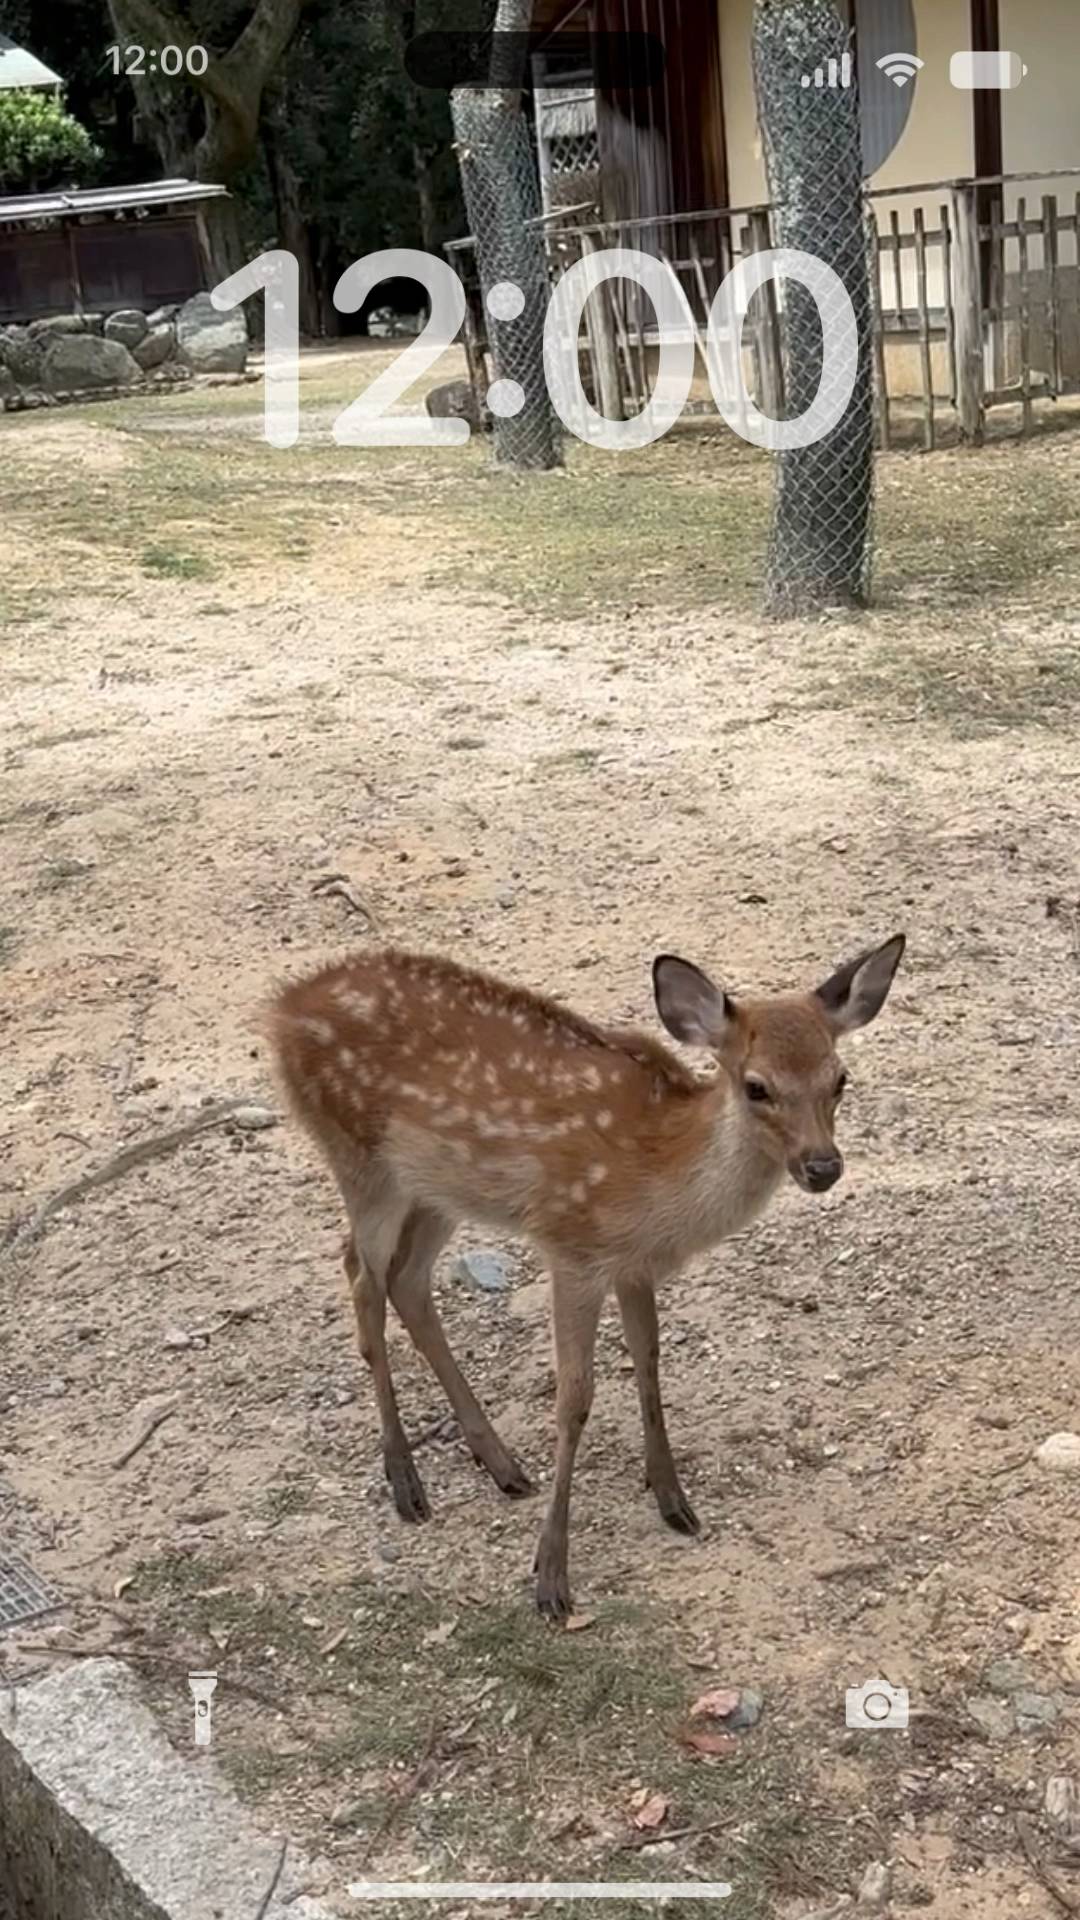 Nara cute deer 🦌🍁 Live Hintergrund[ltE2WDsbyYP7yruGvDEu]